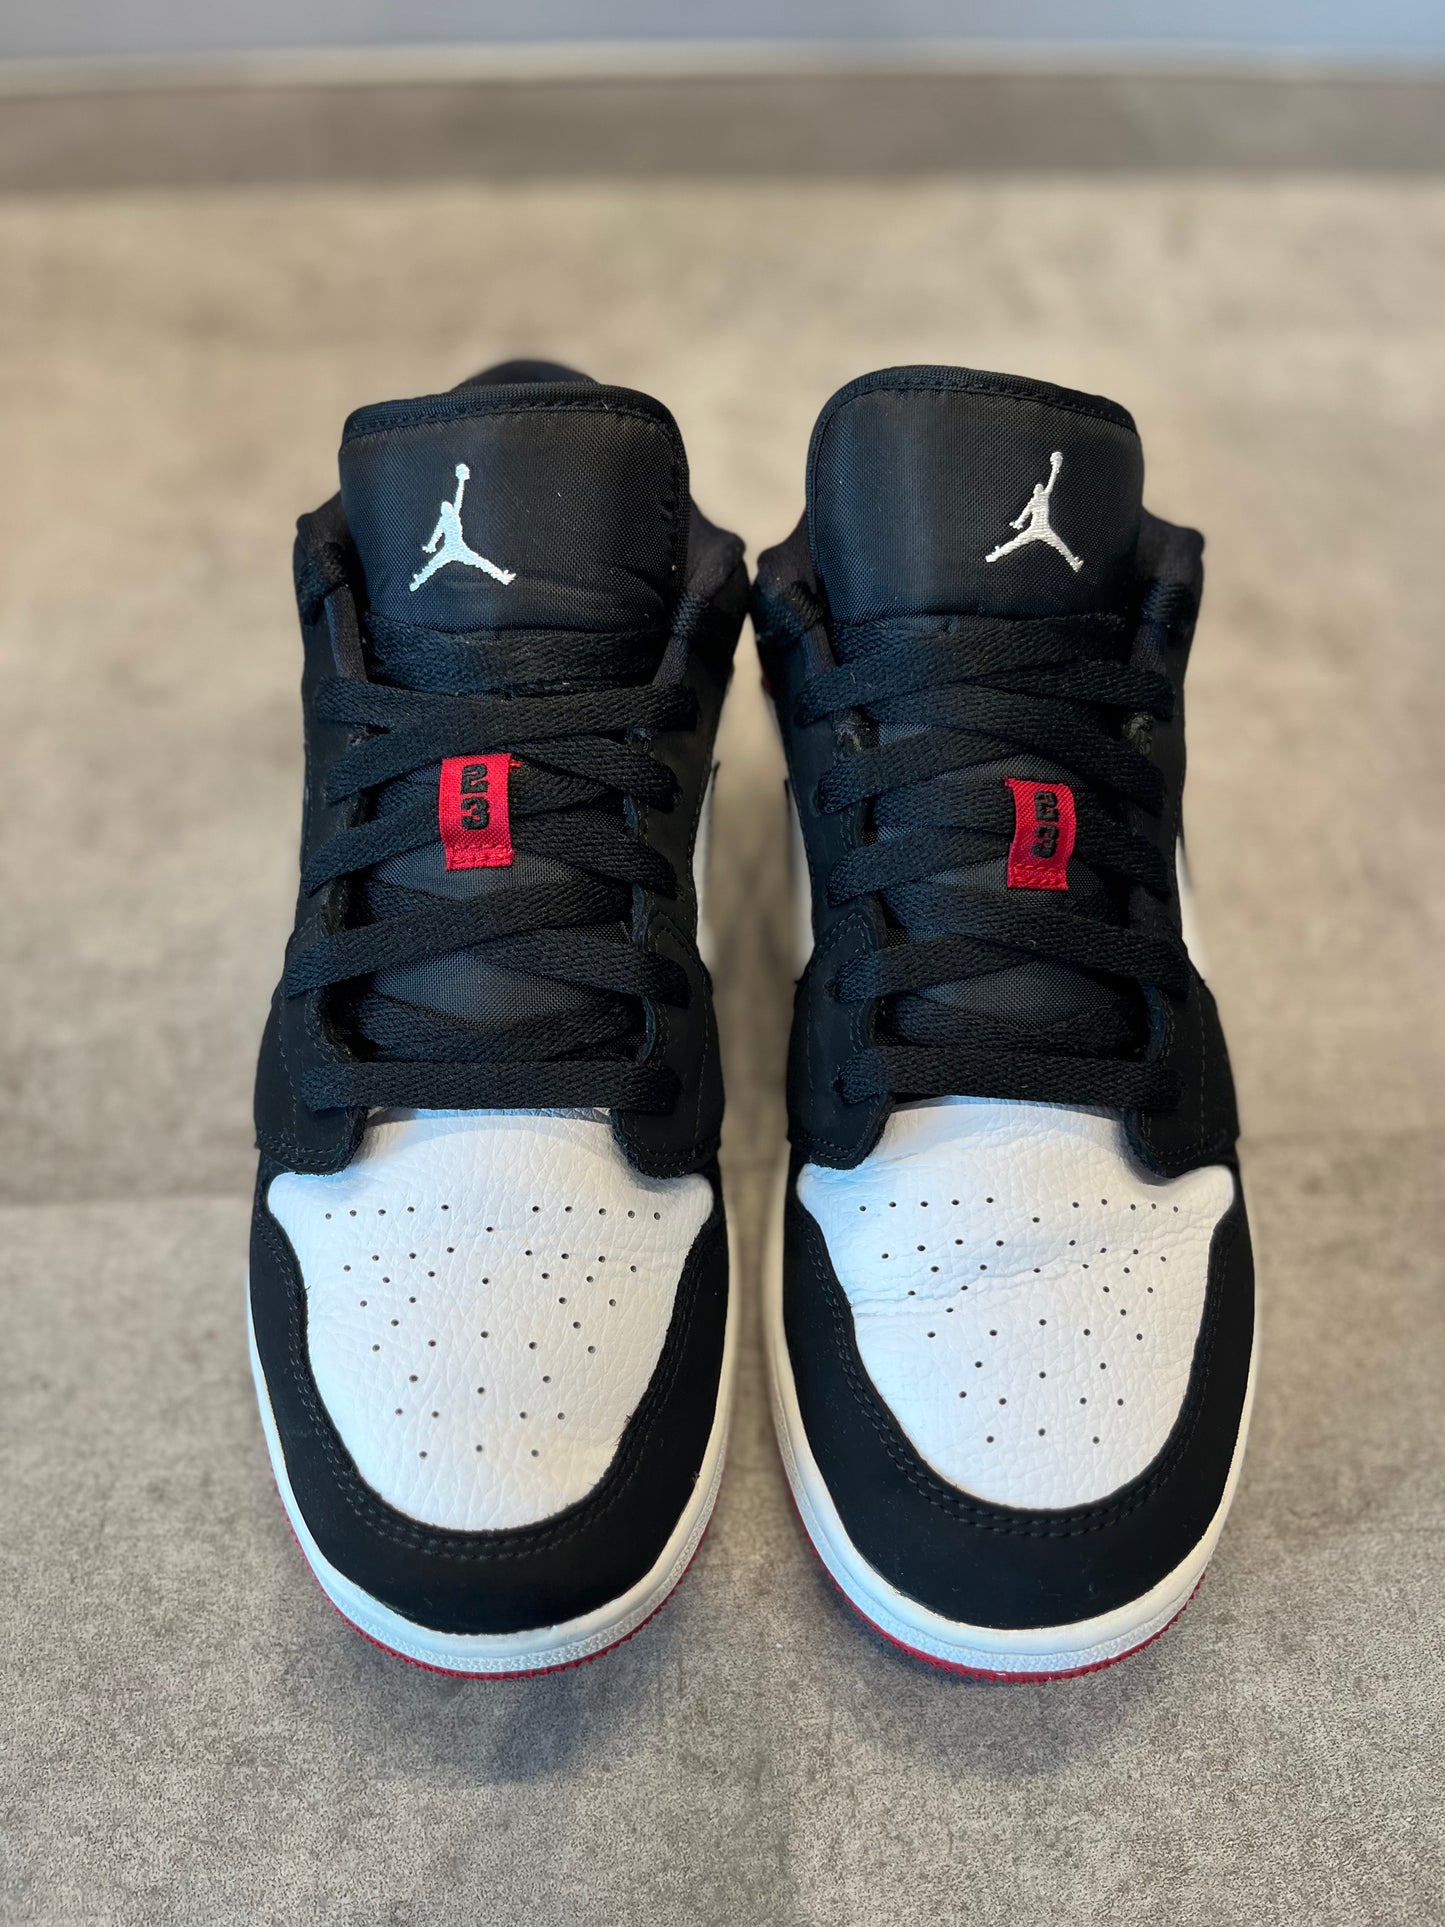 Jordan 1 Low Black Toe (GS) (Preowned)